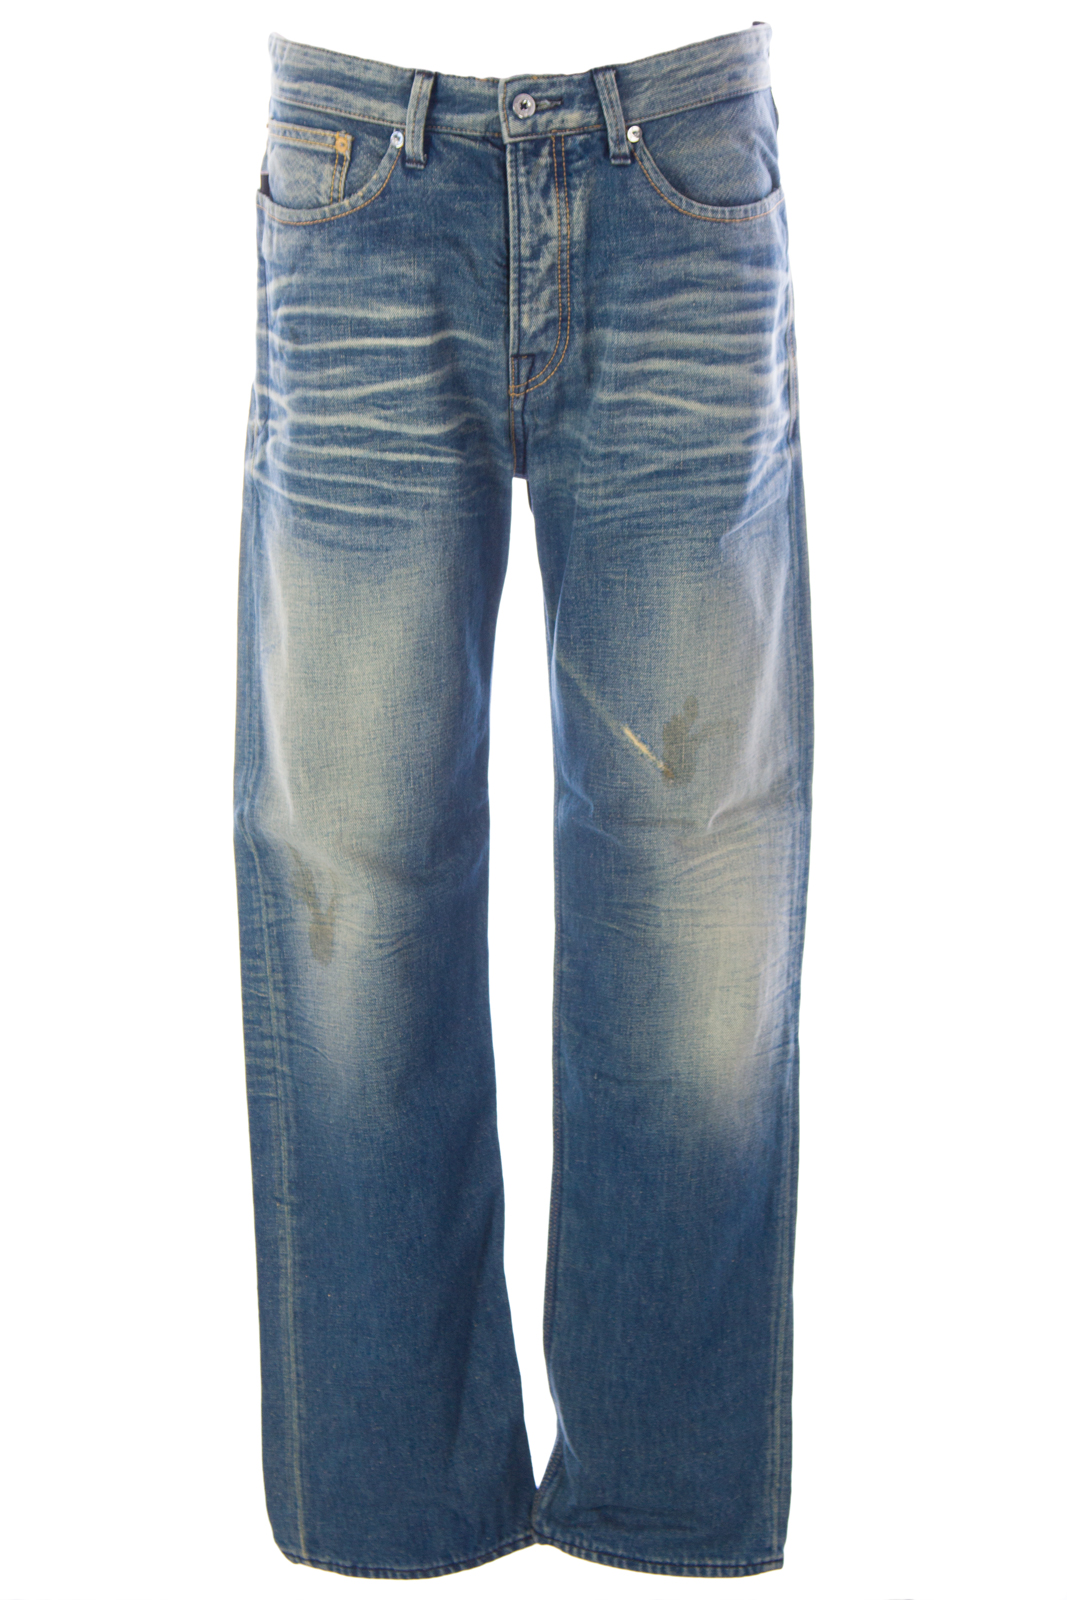 BLUE BLOOD Men's Jack PD Dirty Wash Denim Jeans MFOFW0615 $250 NWT | eBay